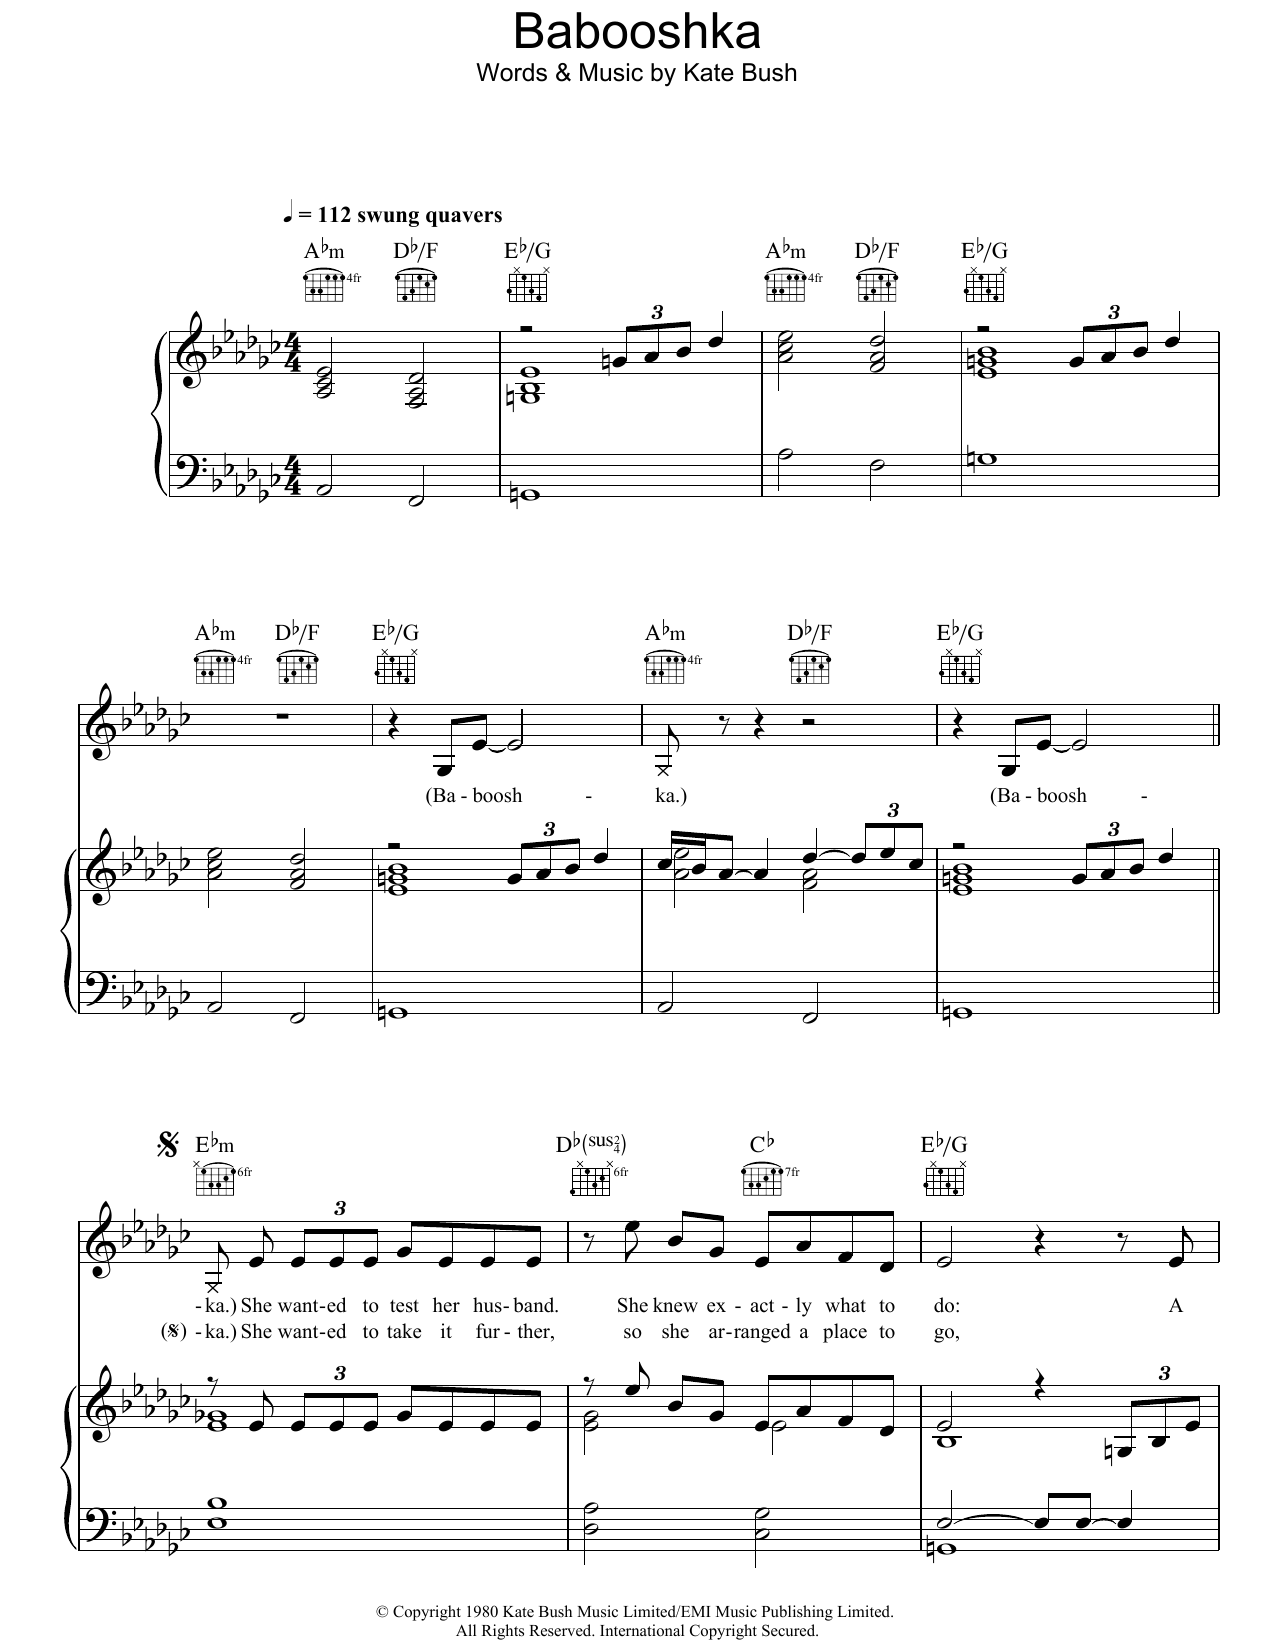 Kate Bush Babooshka Sheet Music Notes & Chords for Piano, Vocal & Guitar (Right-Hand Melody) - Download or Print PDF